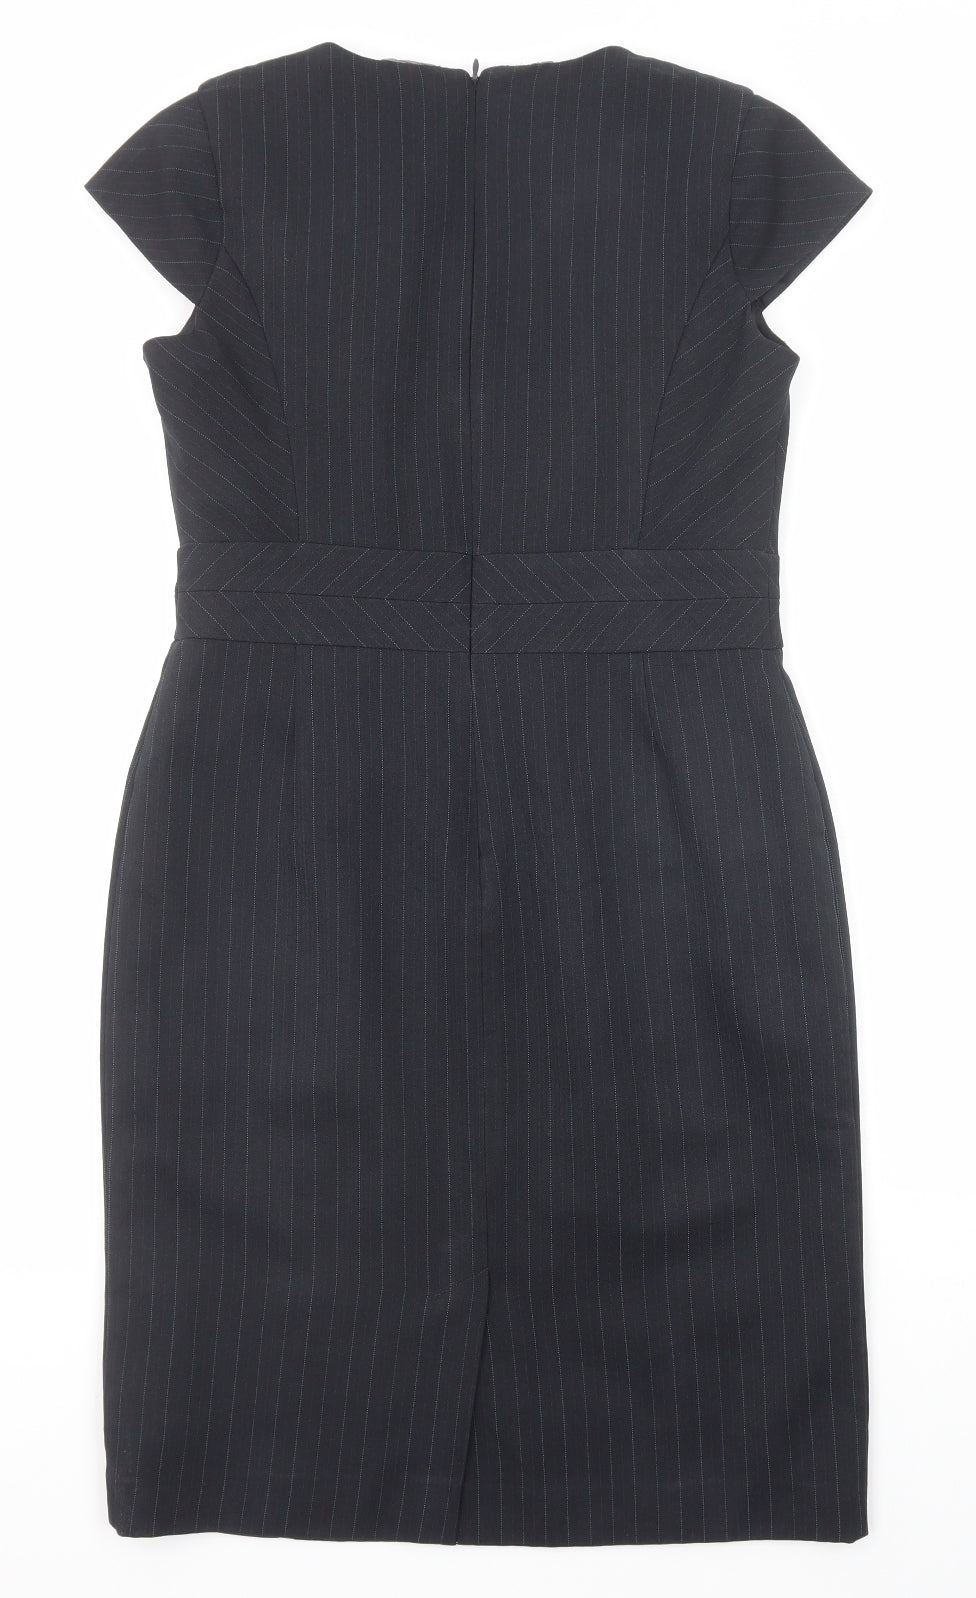 Debenhams Womens Grey Striped Polyester Shift Size 12 V-Neck Zip